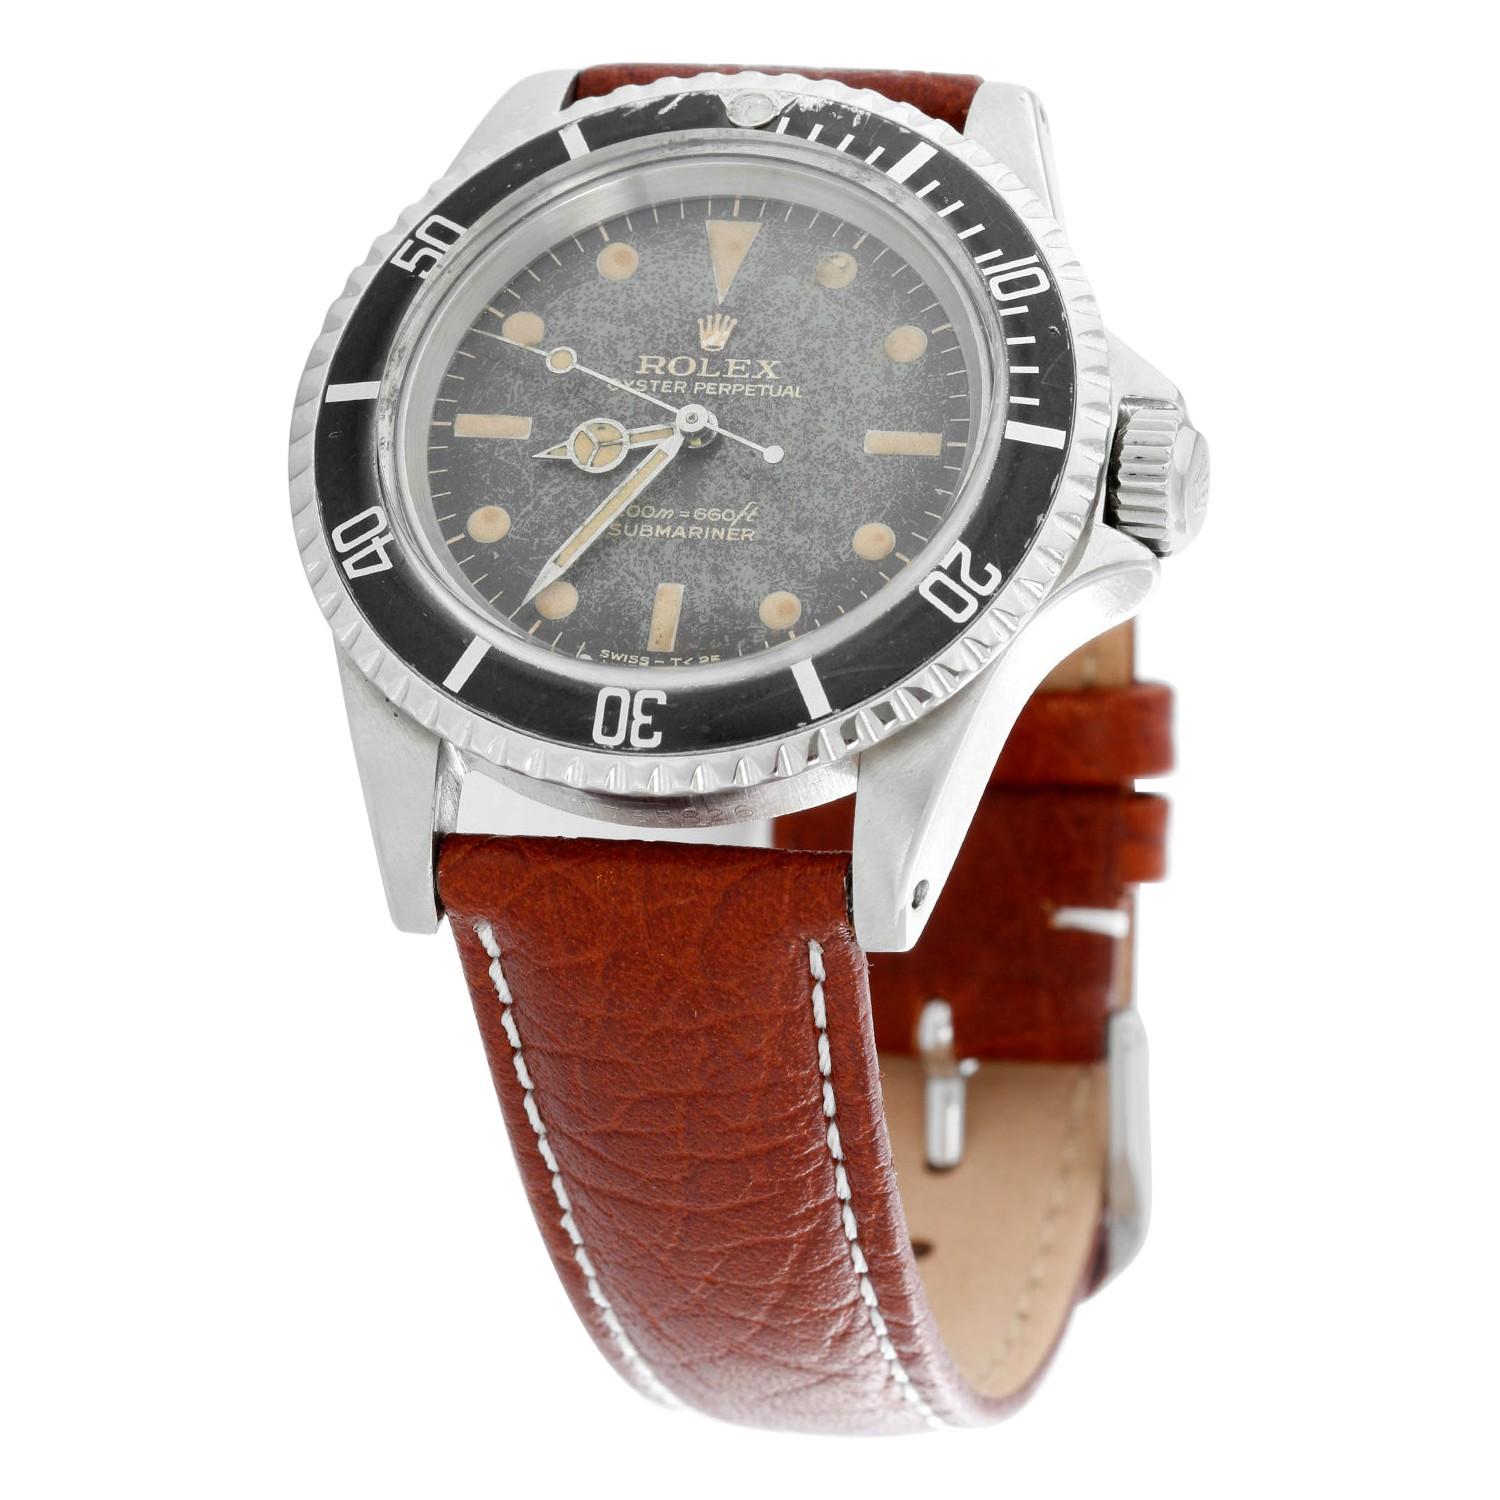 Vintage Rolex Submariner Gilt Dial Men's Automatic Watch 5513